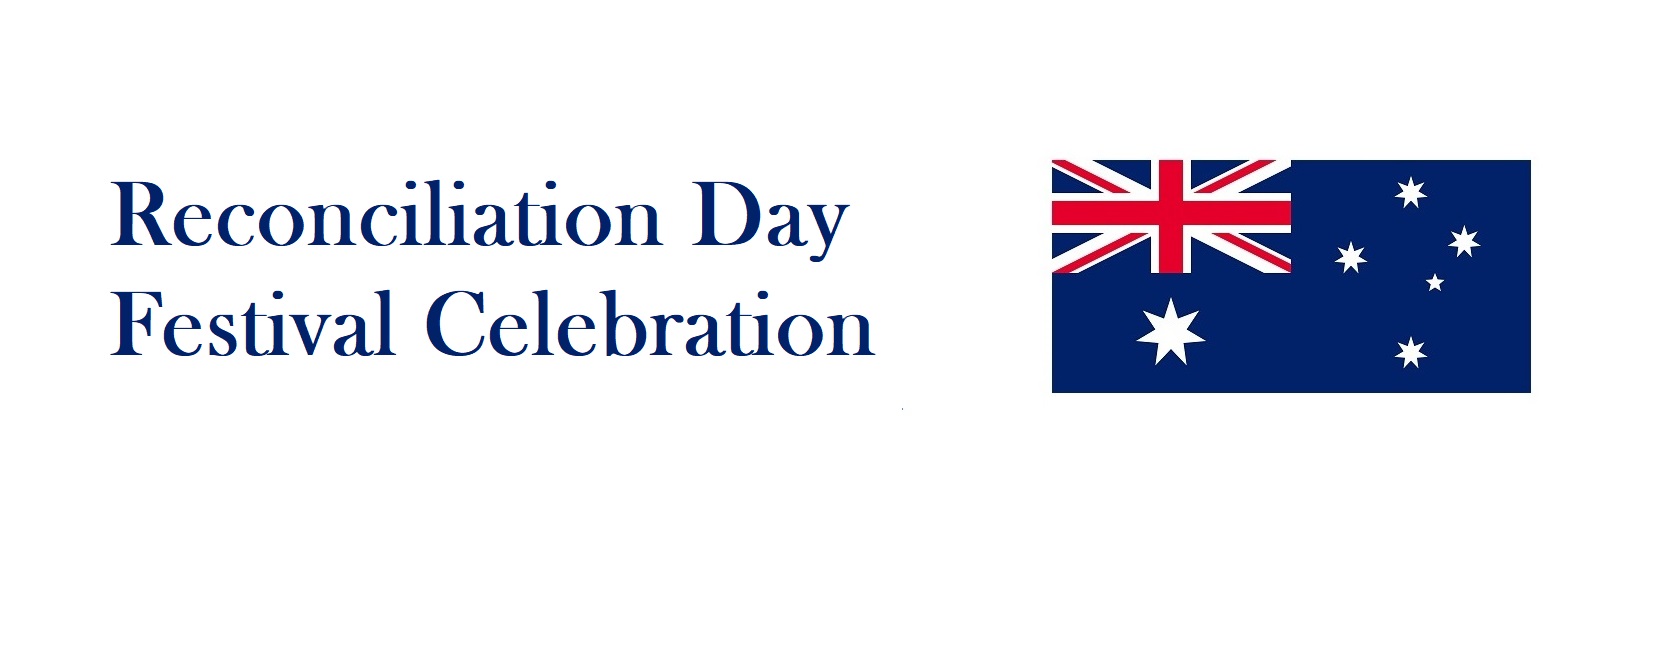 Reconciliation Day Public Holiday, Australia